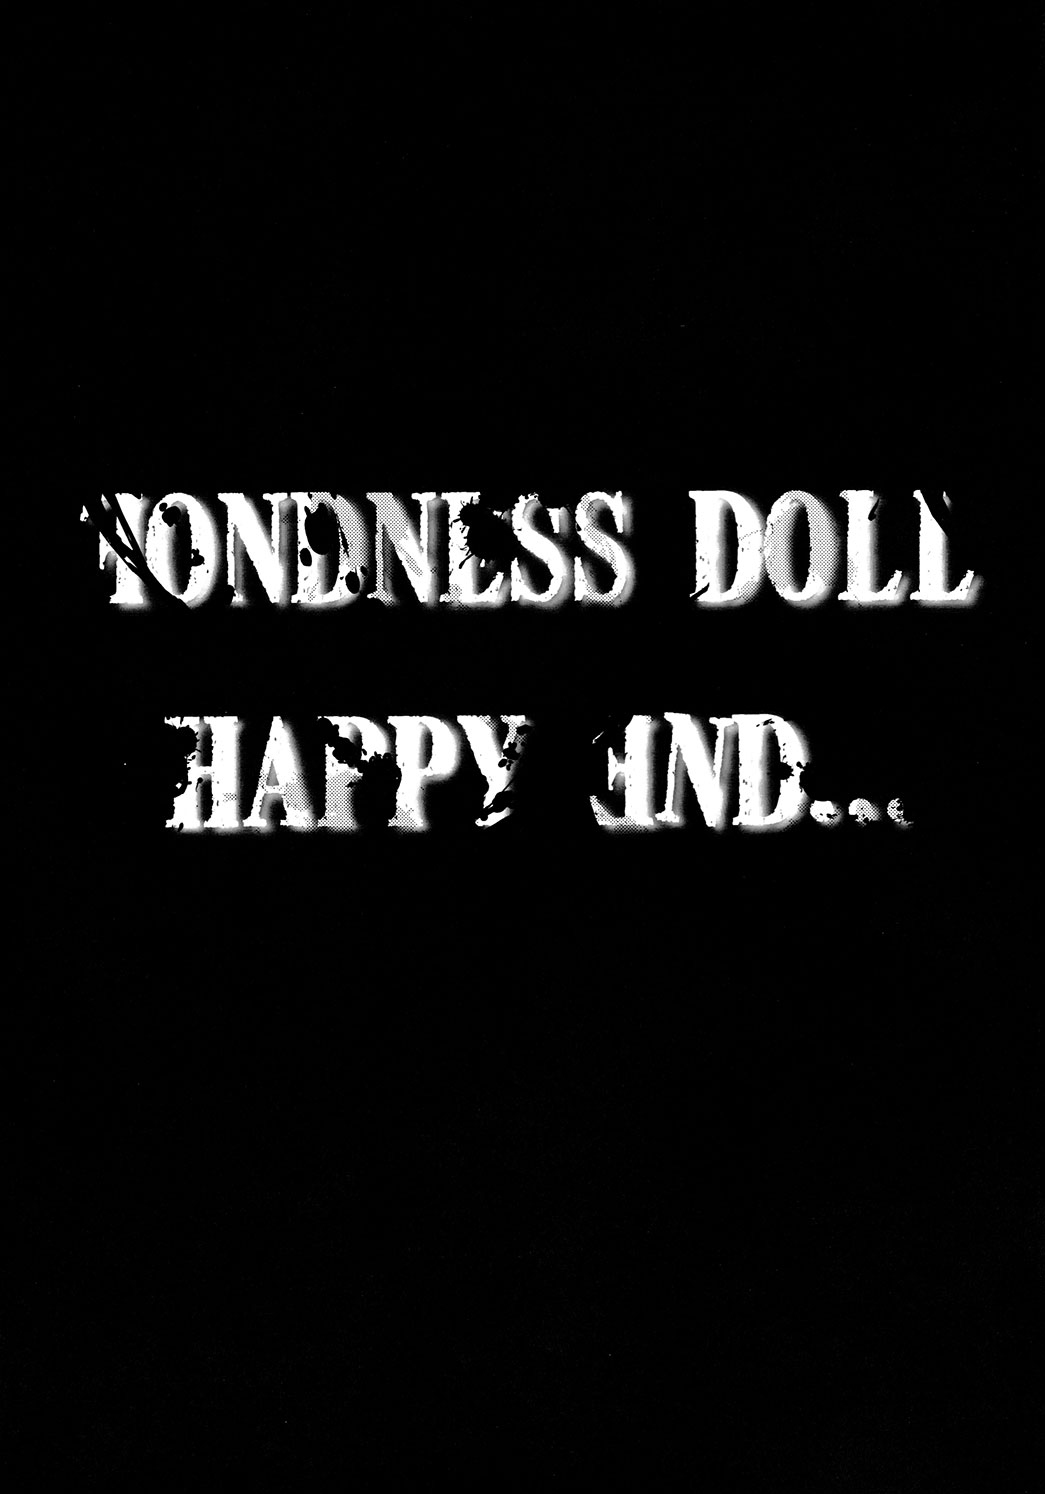 (C91) [御主人様の玩具箱 (hal)] Fondness Doll Happy END [中国翻訳]